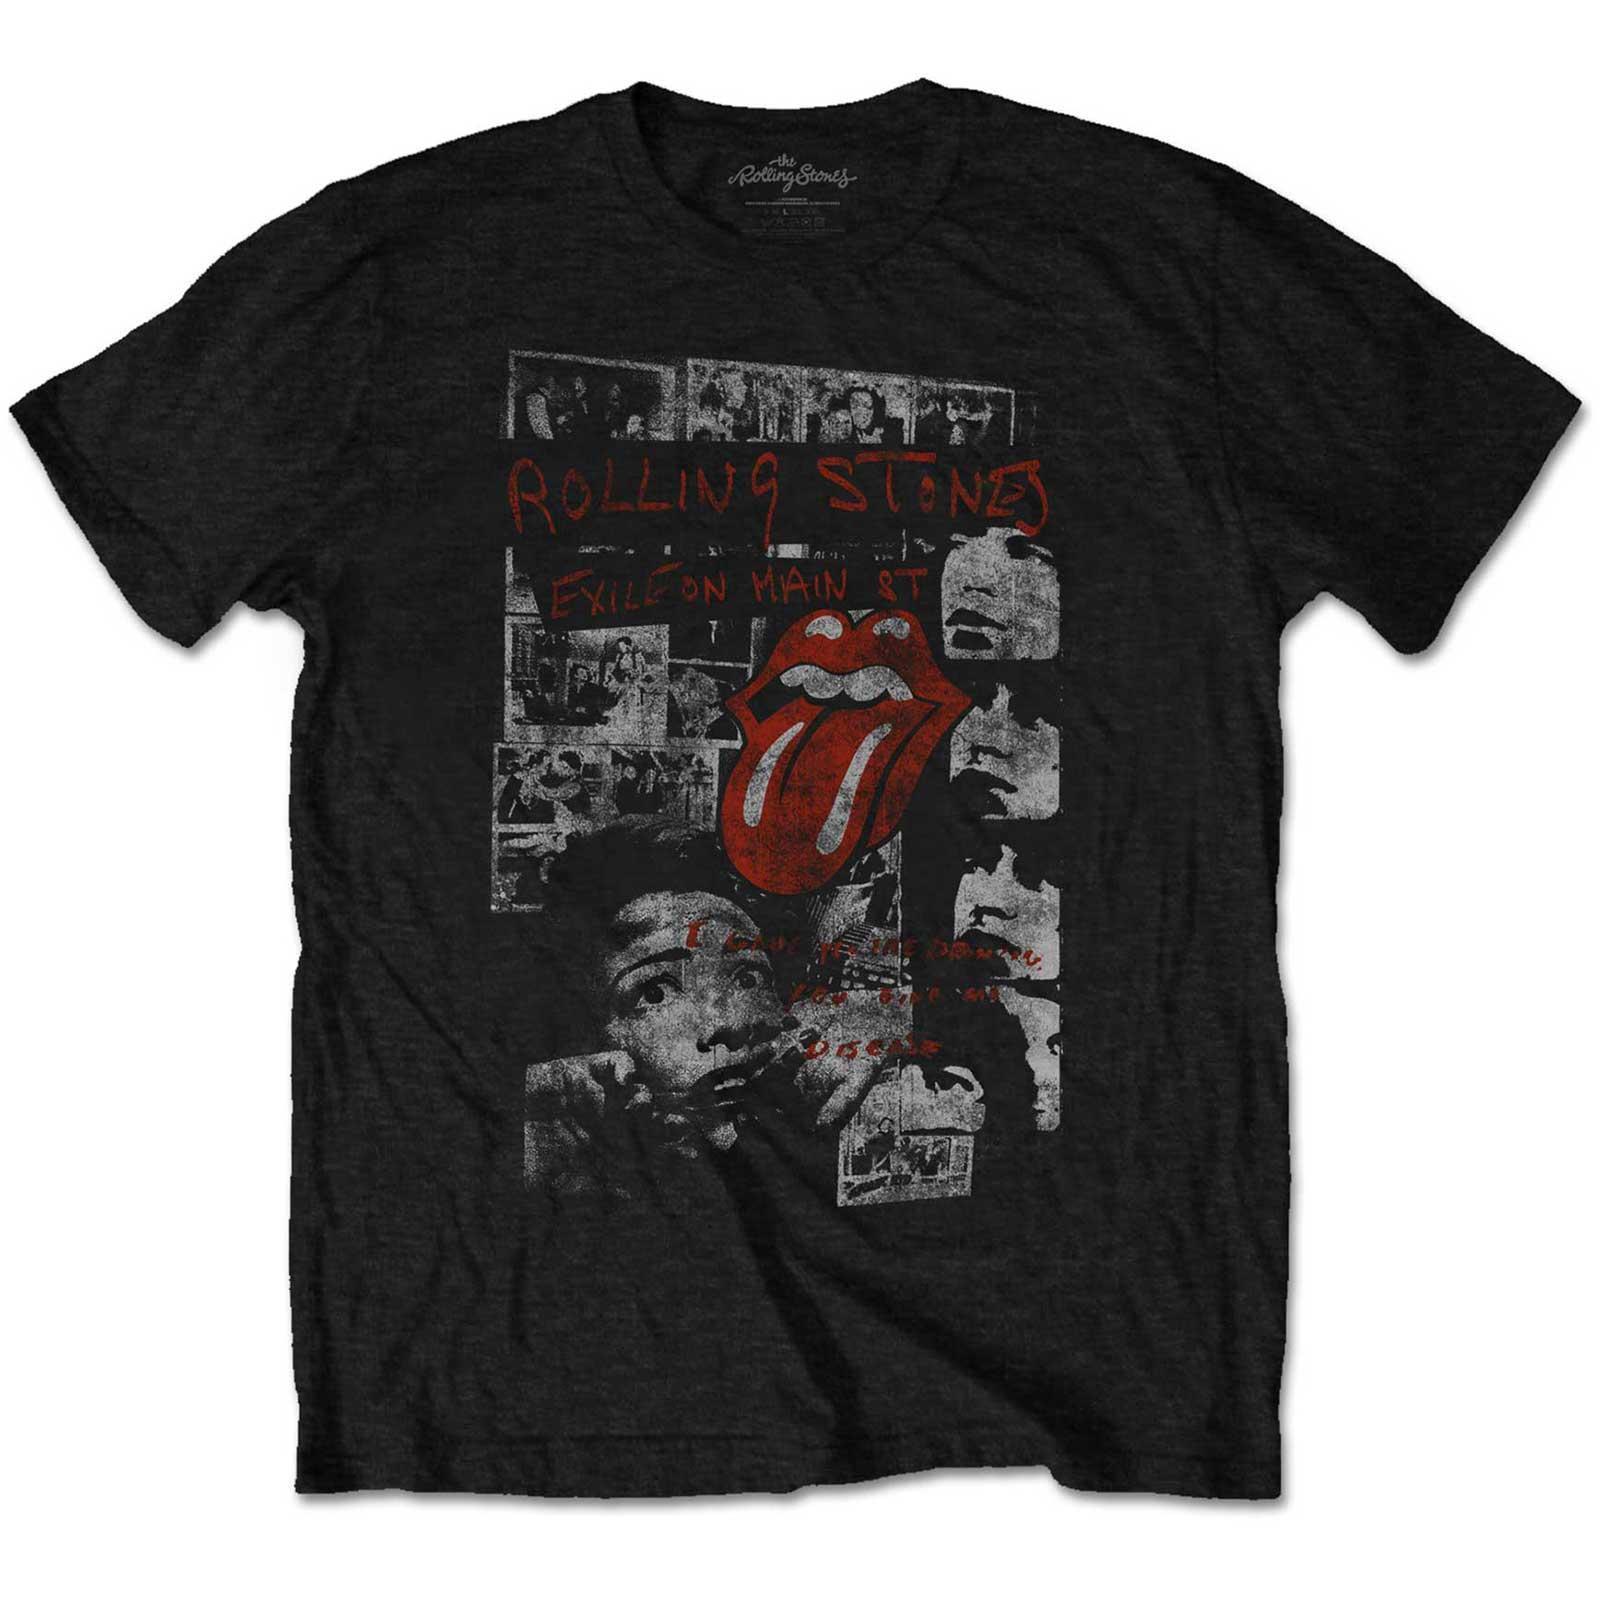 The Rolling Stones Unisex Adult Elite Faded Cotton T-Shirt (Black) (M)